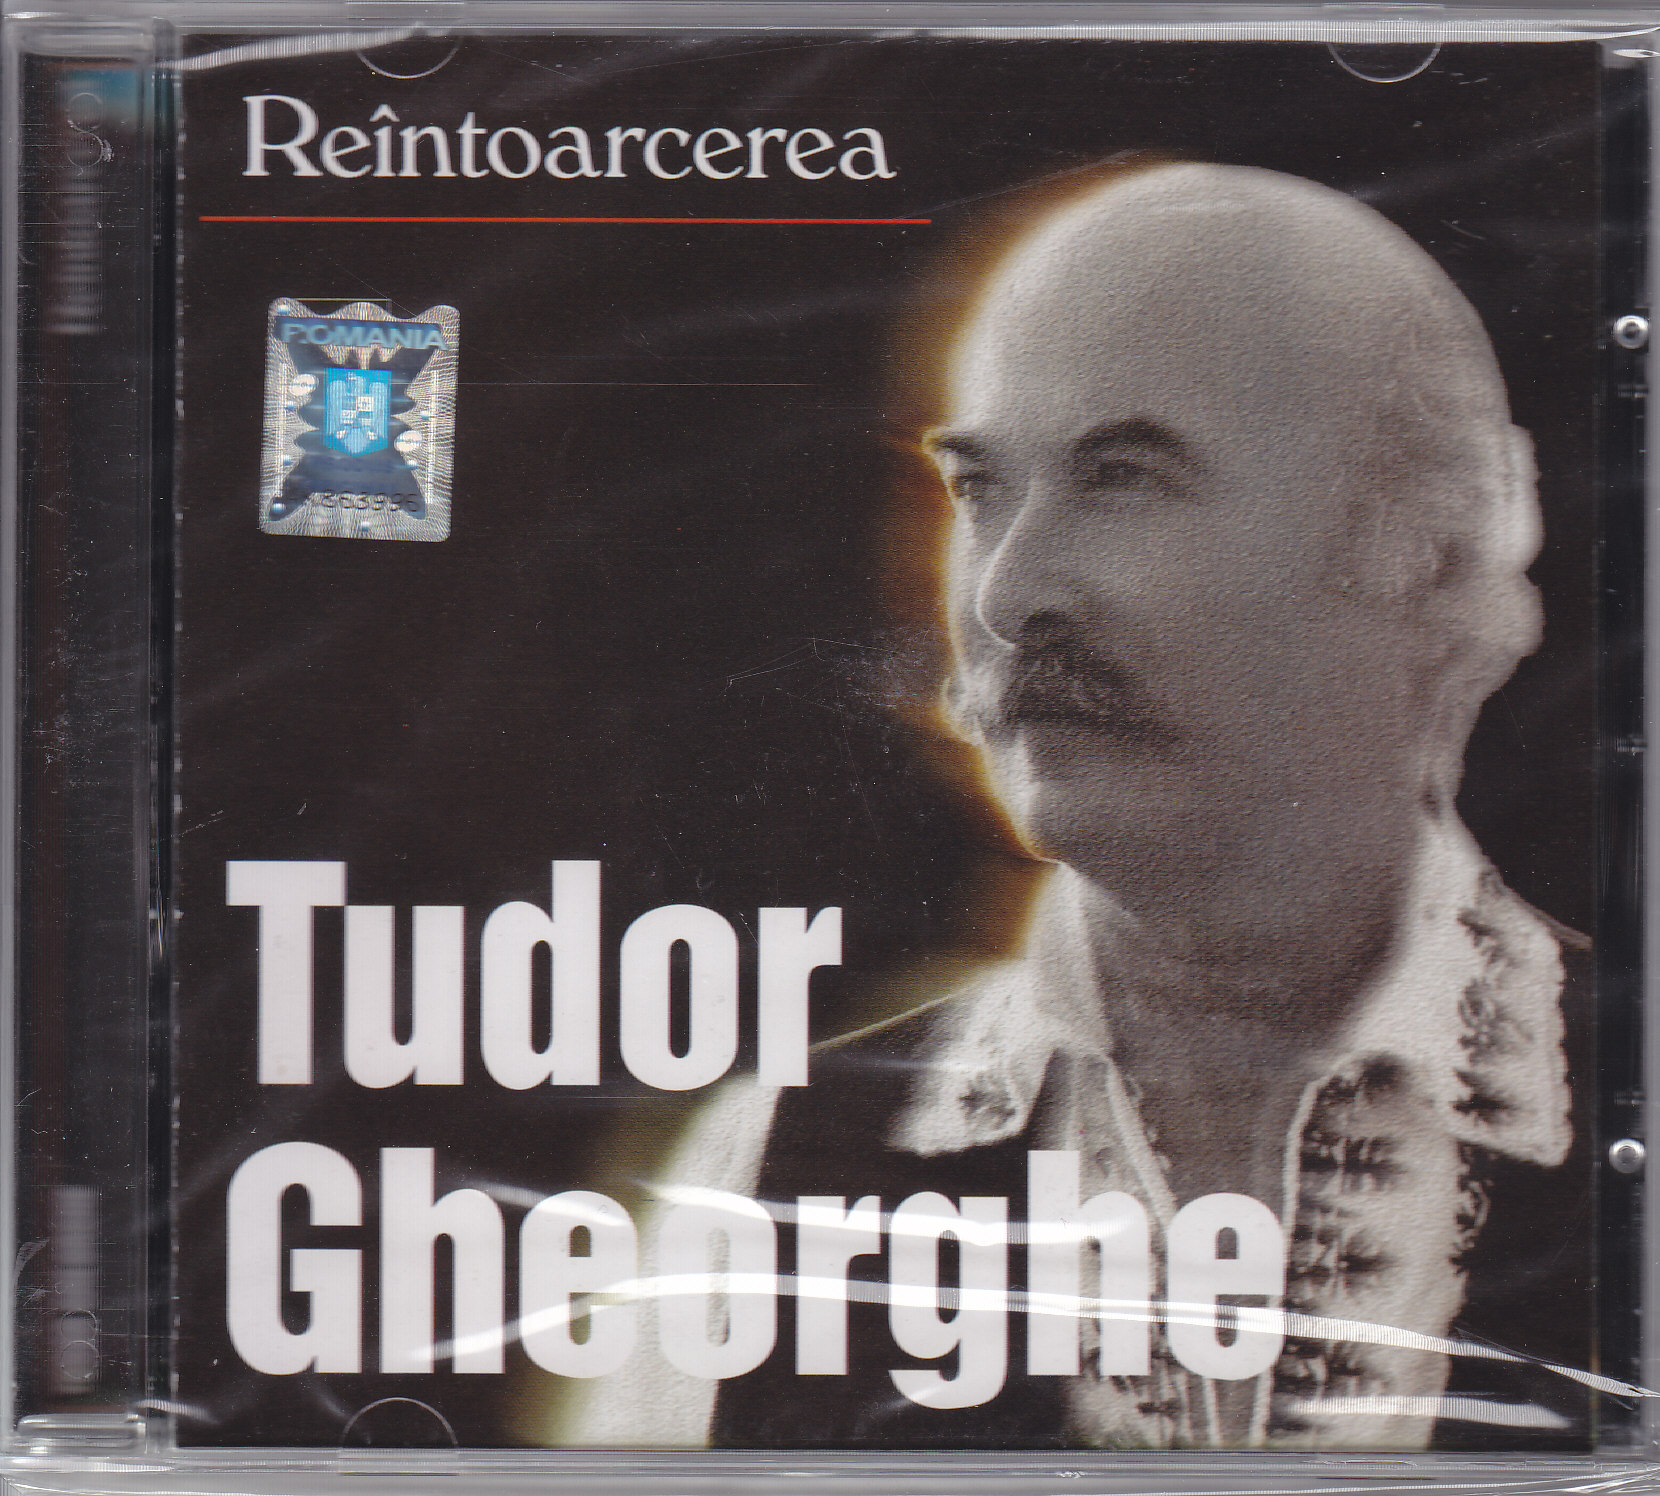 CD Tudor Gheorghe - Reintoarcerea